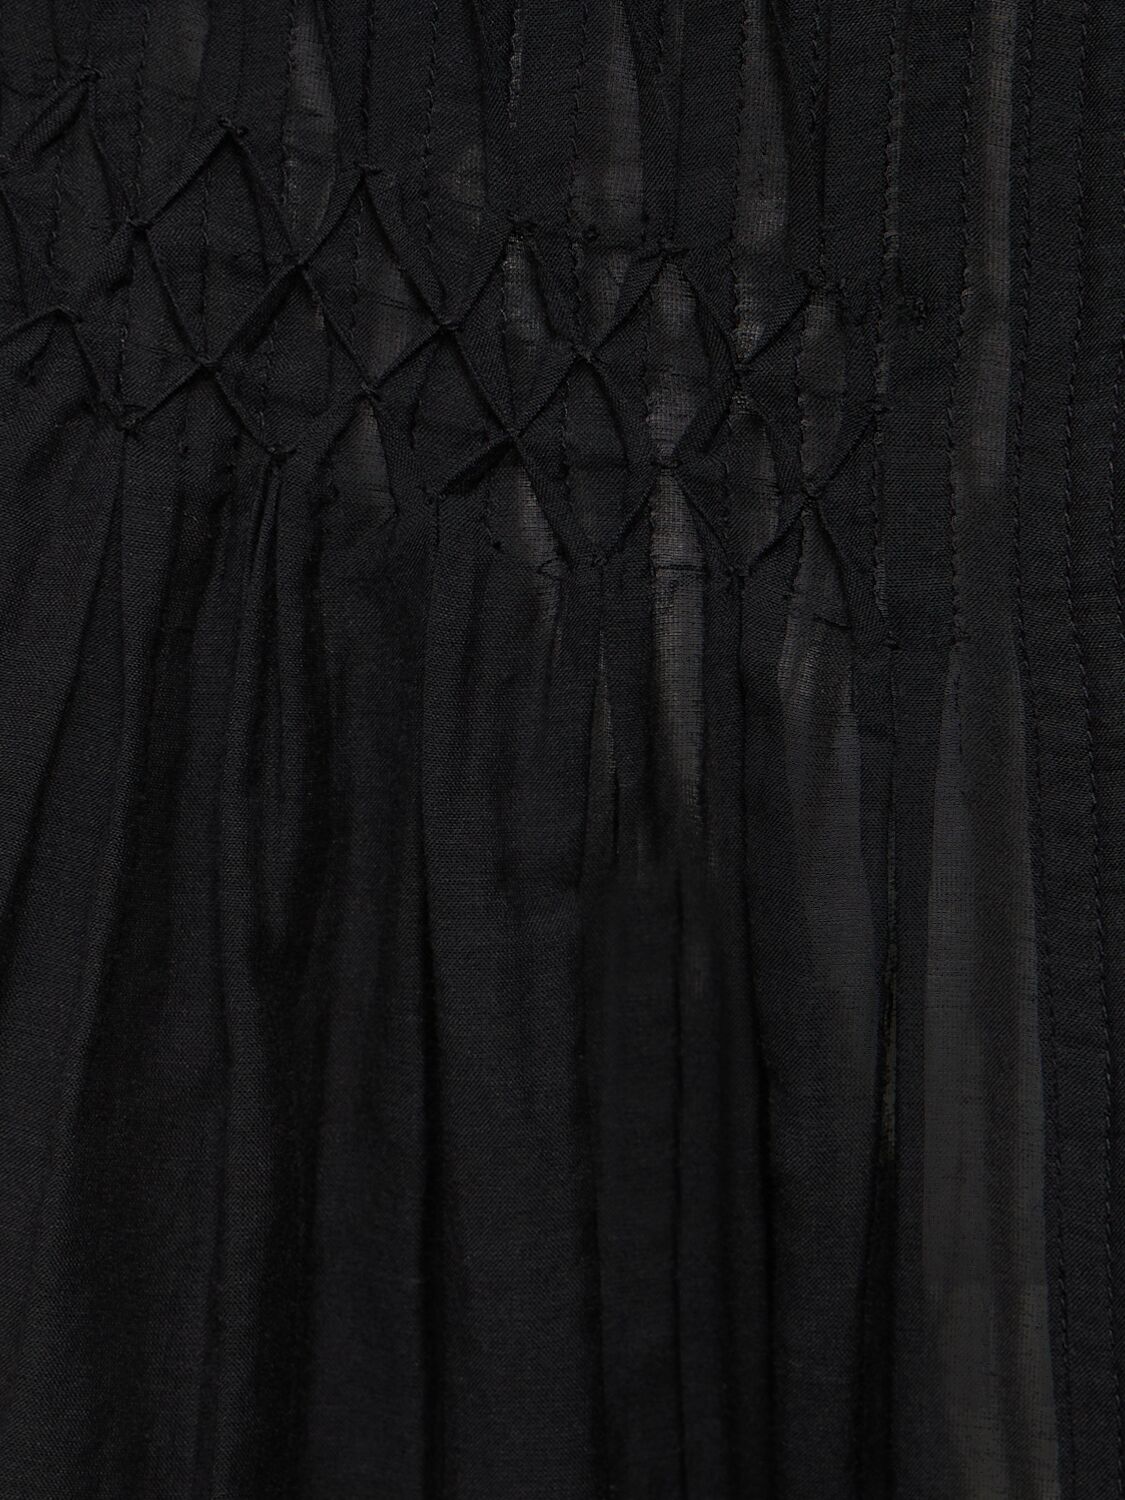 Shop Marant Etoile Abadi Buttoned Cotton Blend Shirt In Black